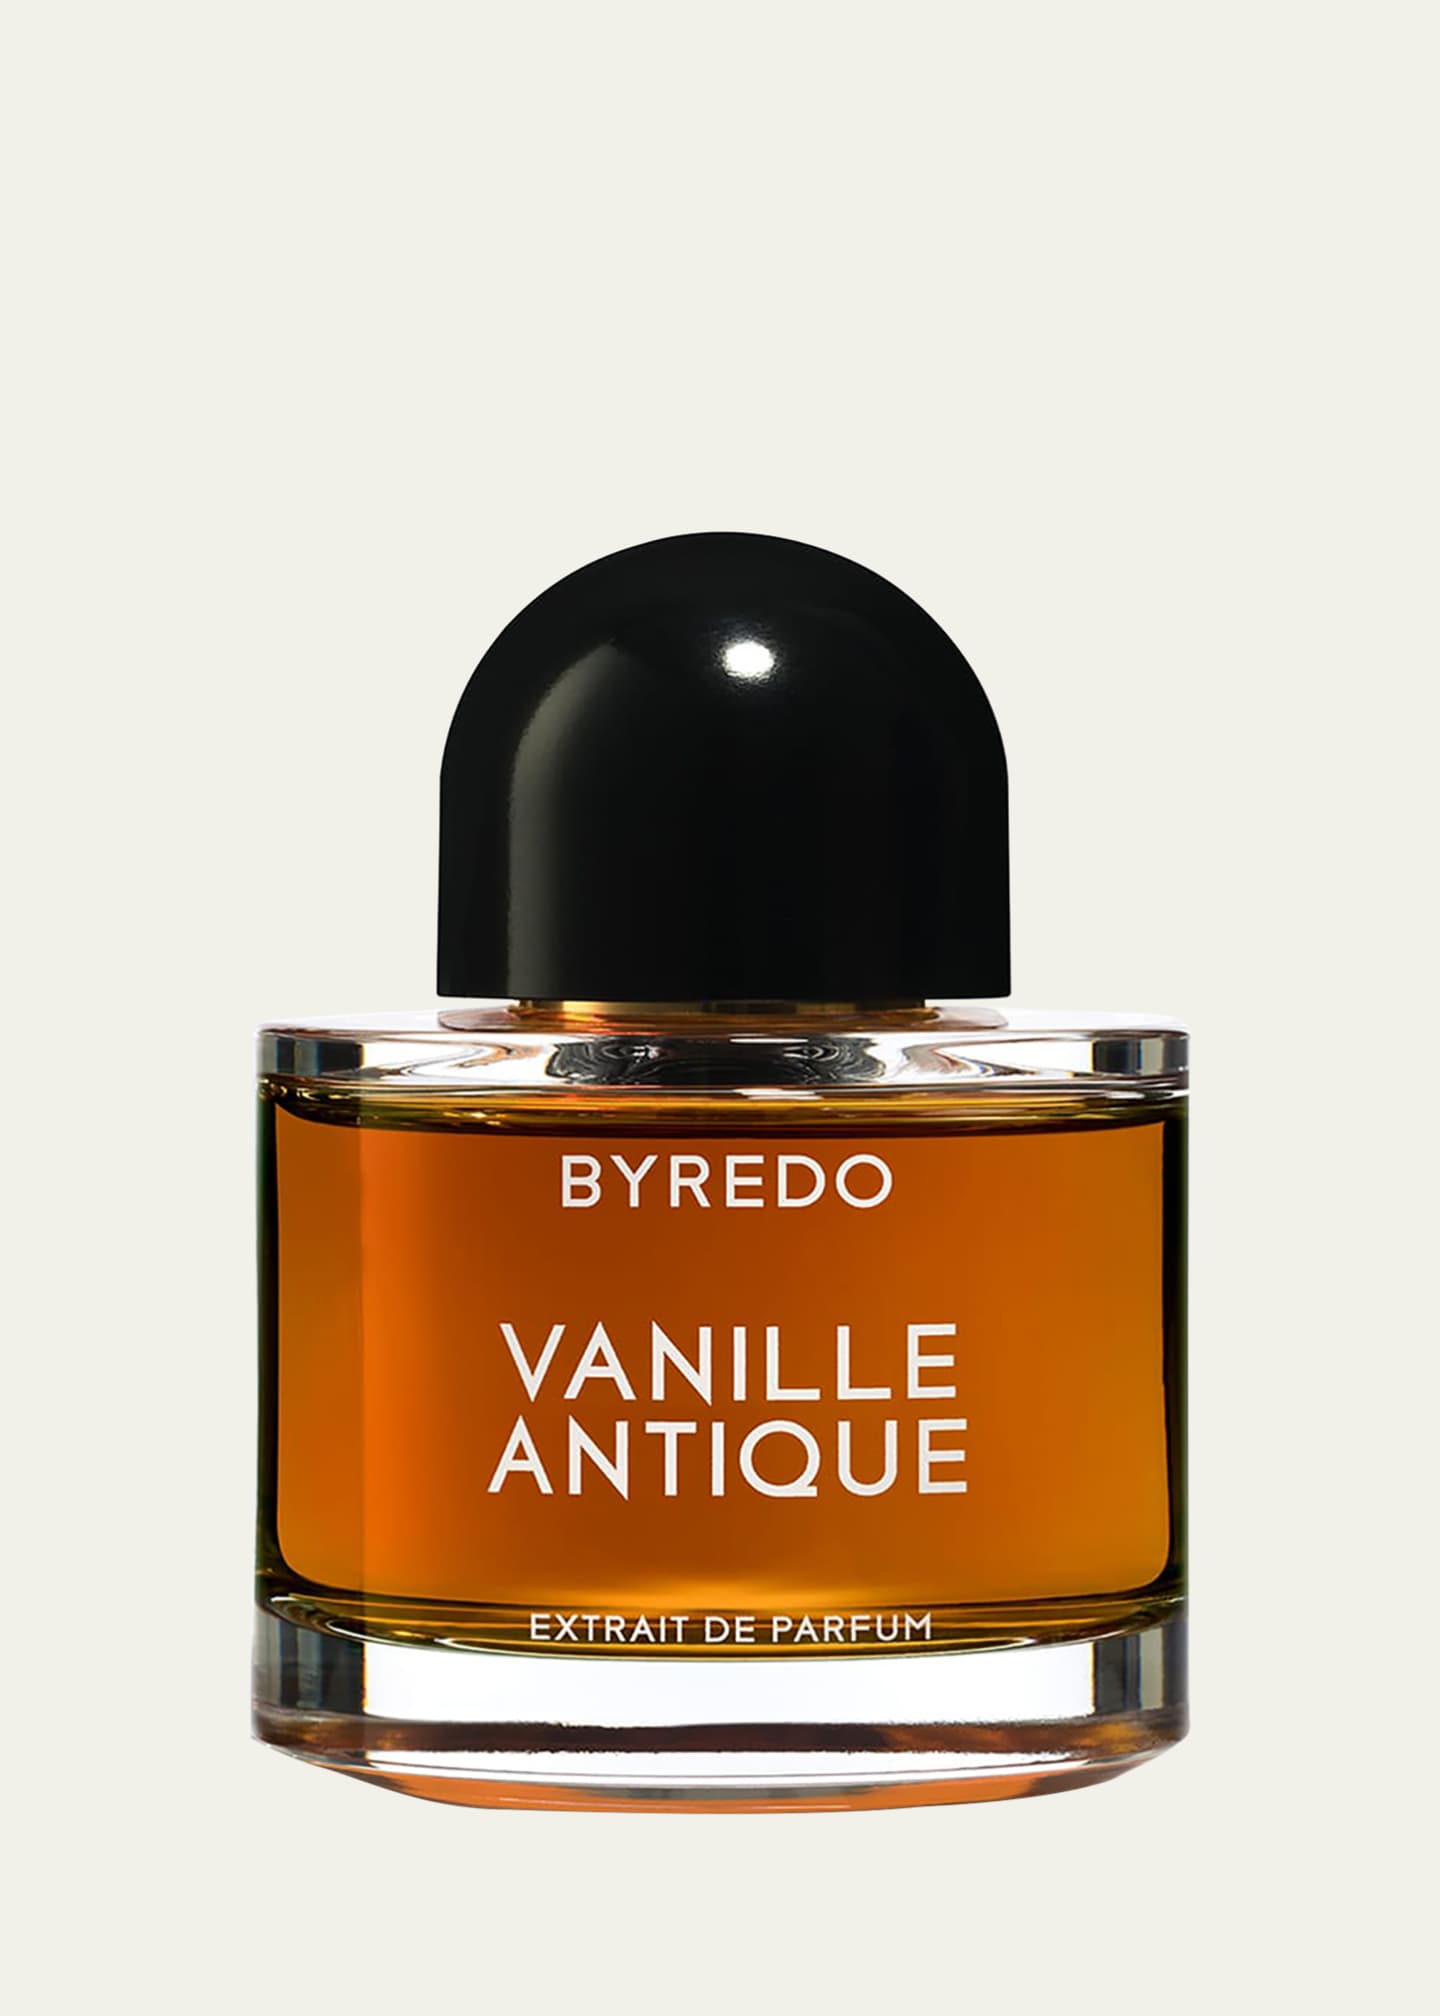 BYREDO Vanille Antique Extrait de Parfum